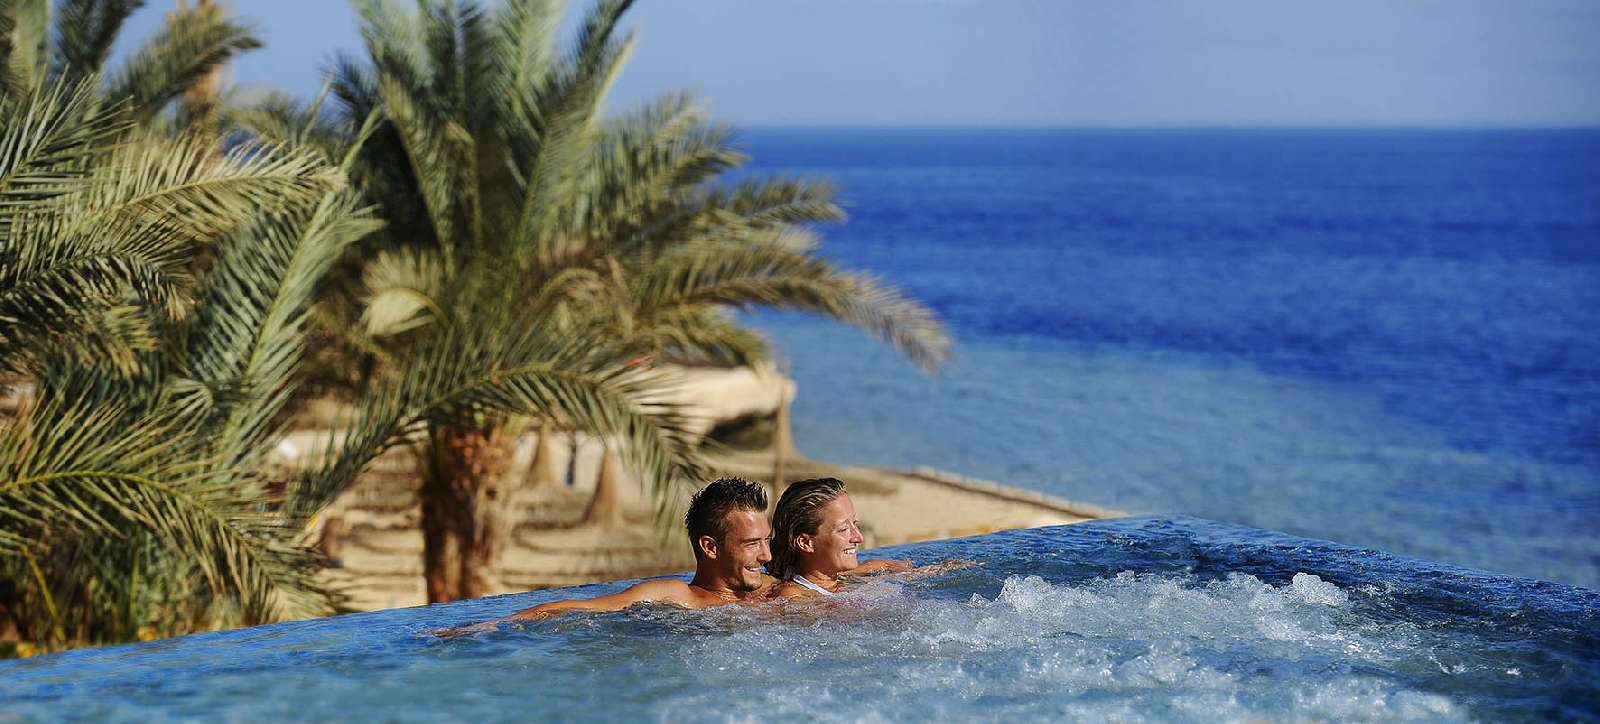 Sharm El Sheikh – Reef Oasis Blue Bay Resort  reef-oasis-blue-bay-resort-jacuzzi.jpg